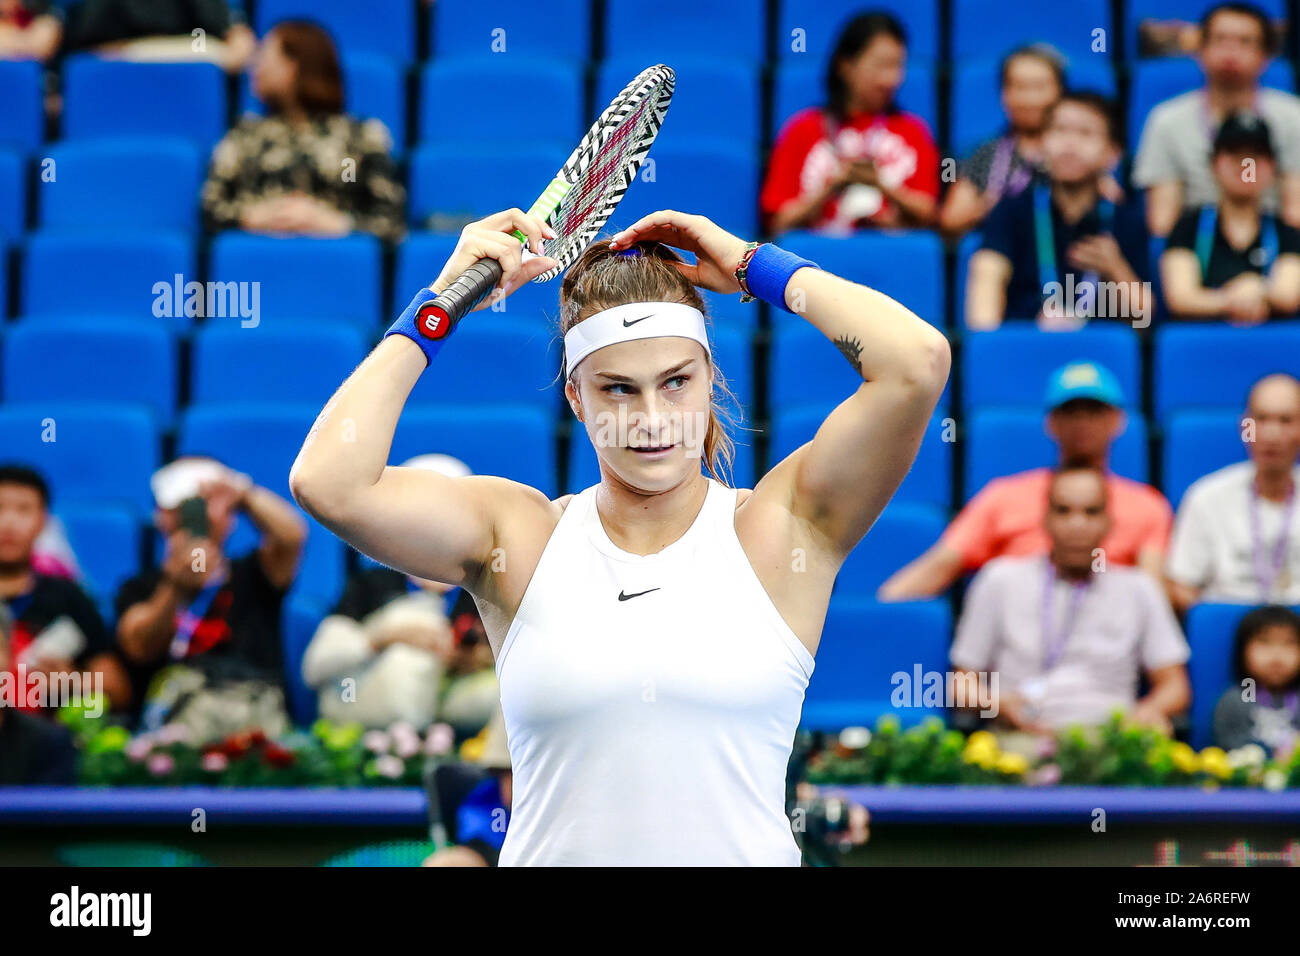 Aryna Sabalenka Of Belarus Reacts During The Women S Singles Final Of The 2019 Wta Elite Trophy Tennis Tournament Against Kiki Bertens Of The Netherla Stock Photo Alamy